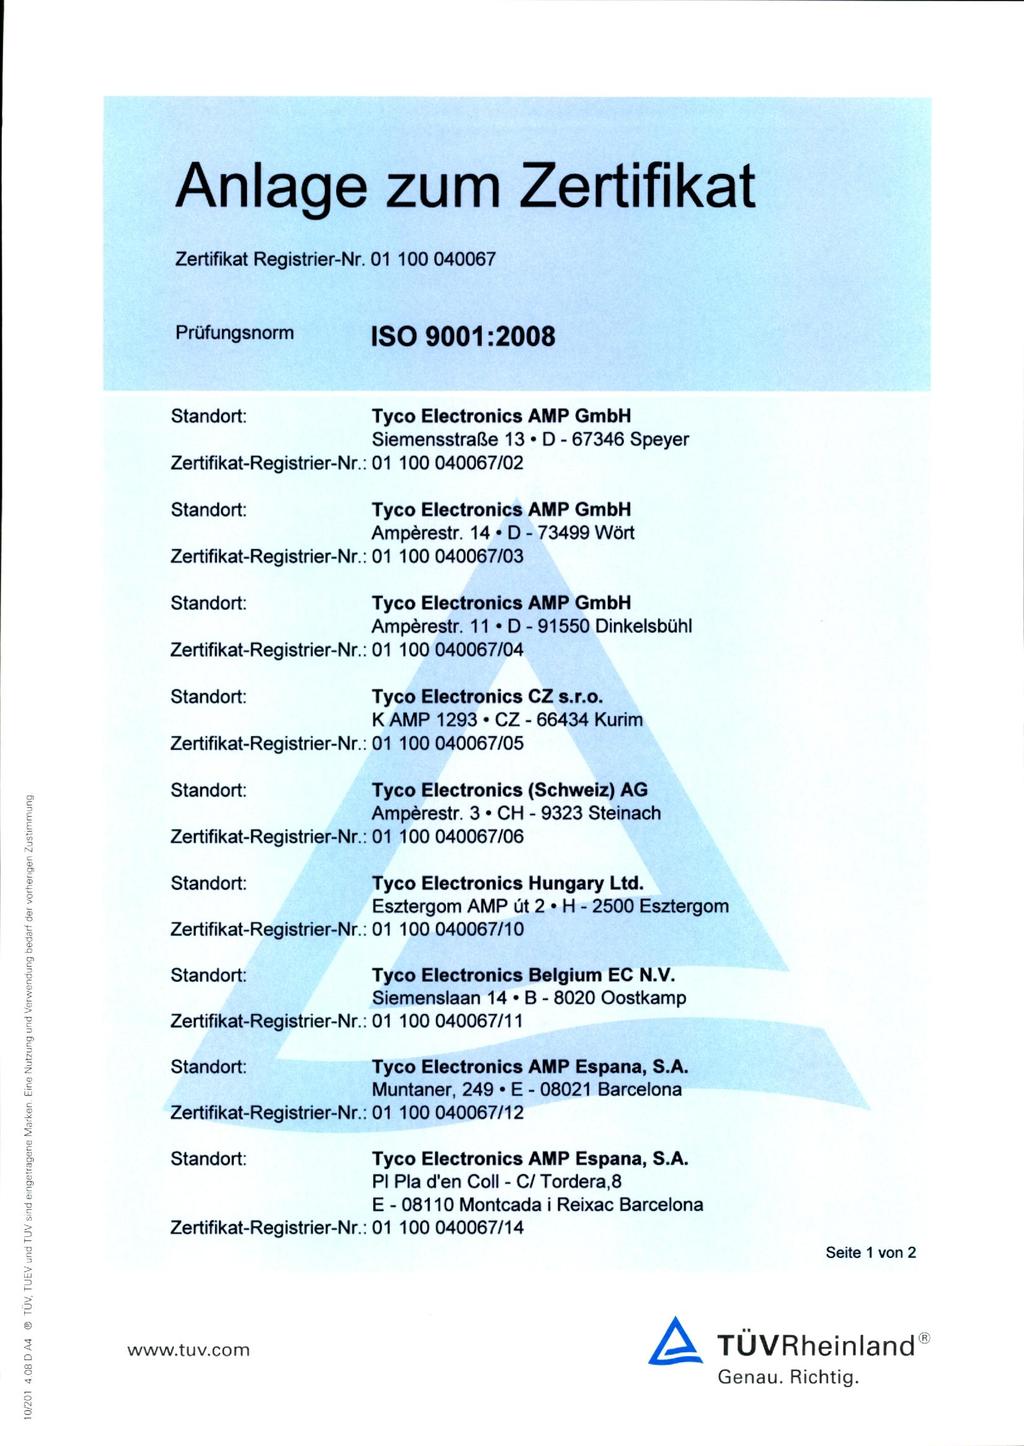 Anlage zum Zertifikat Zertifikat Registrier-Nr. 01 100 040067 PrOfungsnorm IlLm111111111111111111.111111 Tyco Electronics AMP GmbH Siemensstrafle 13 D - 67346 Speyer Zertifikat-Registrier-Nr.